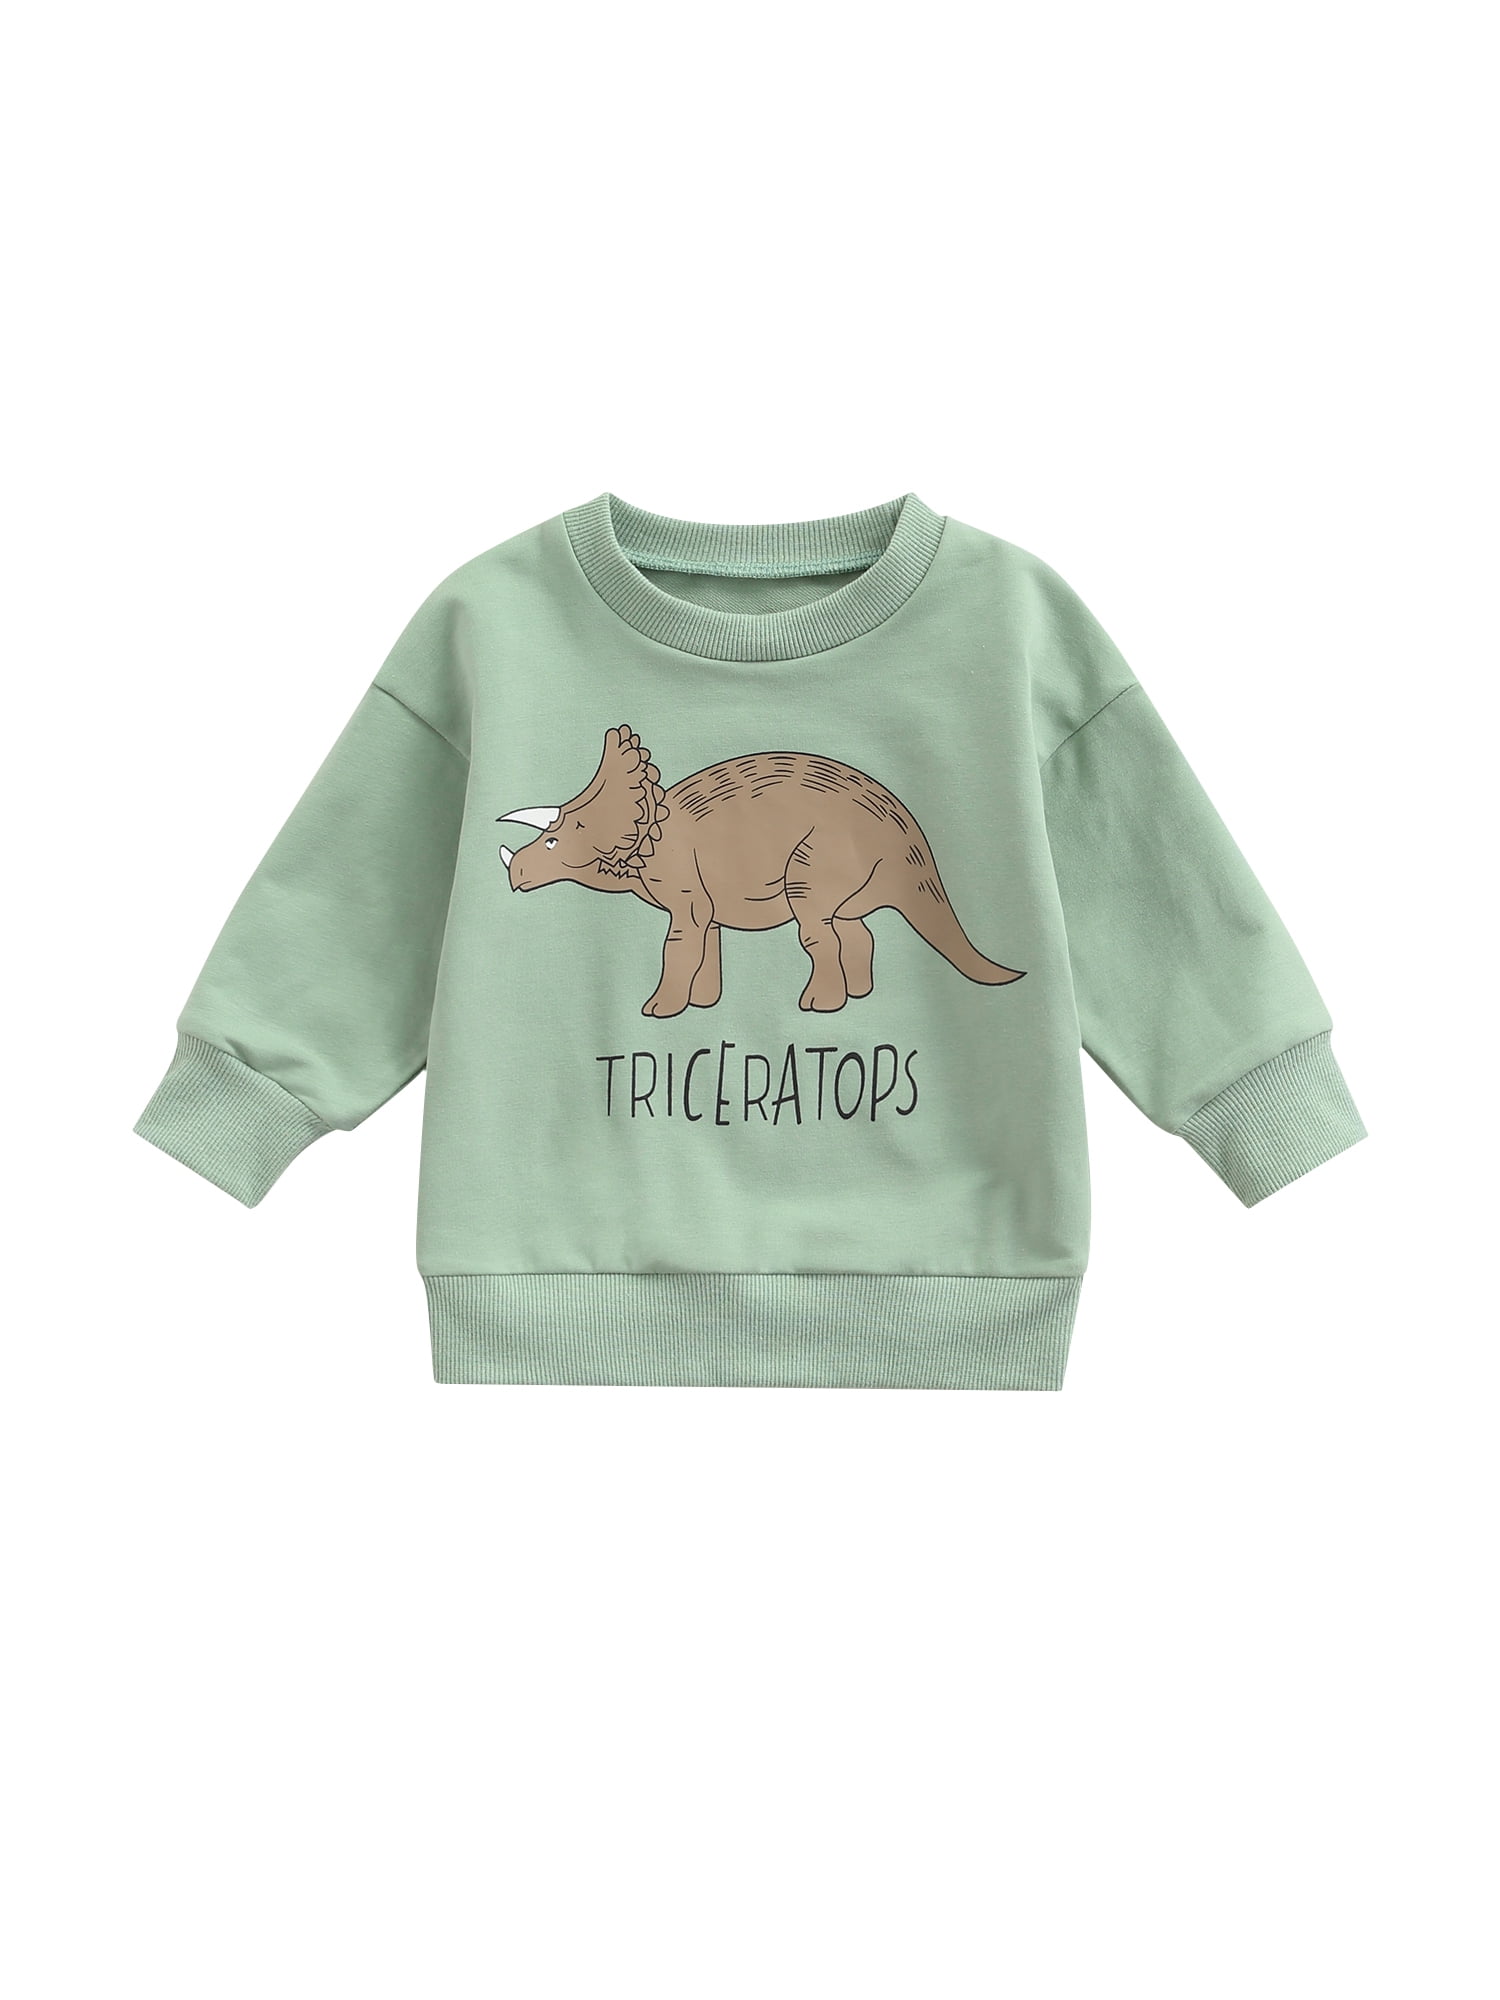 Ailee Hoho Toddler Boys Girls Knit Sweater Baby Dinosaur Warm Pullover Sweatshirt for Winter 